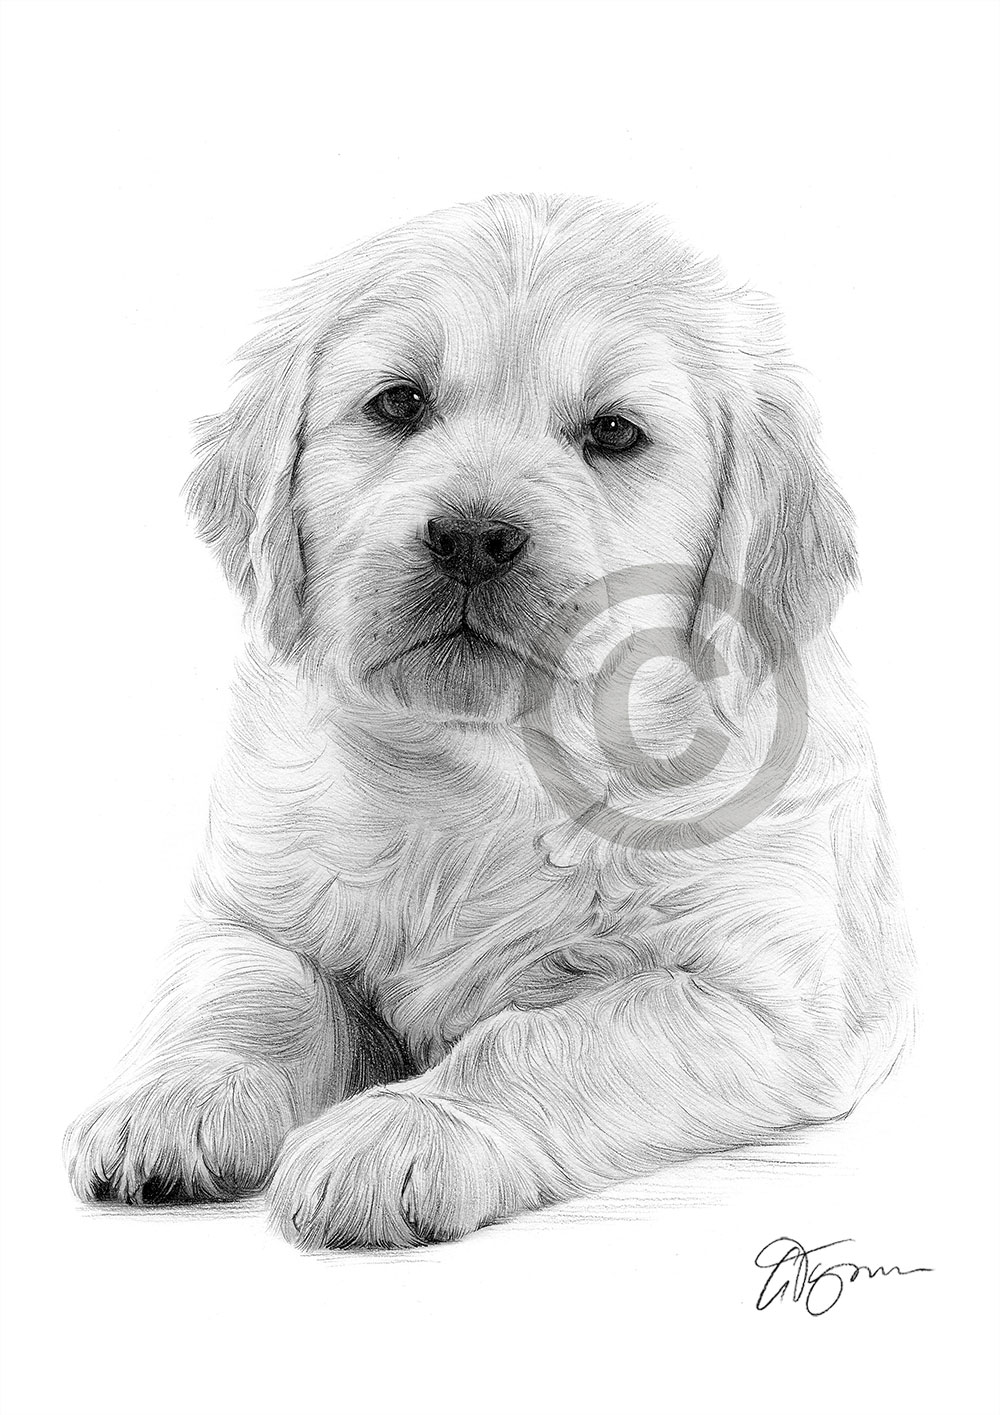 Pencil drawing of a Golden Retriever puppy by artist Gary Tymon